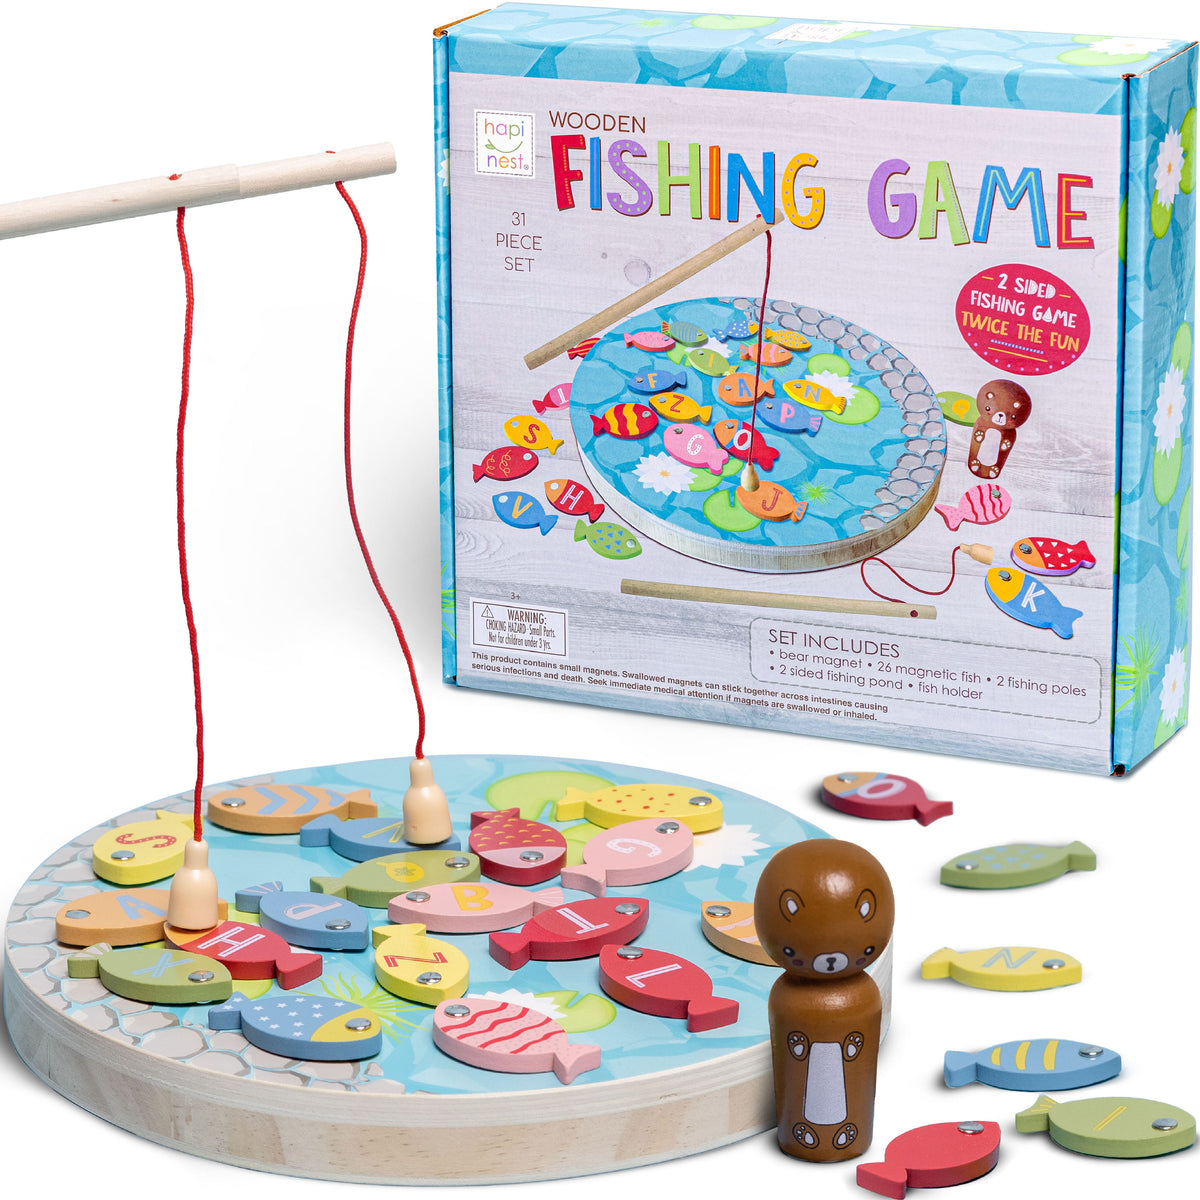  Fishing Game,Juni QUTE,Magnetic Fishing Games for Kids